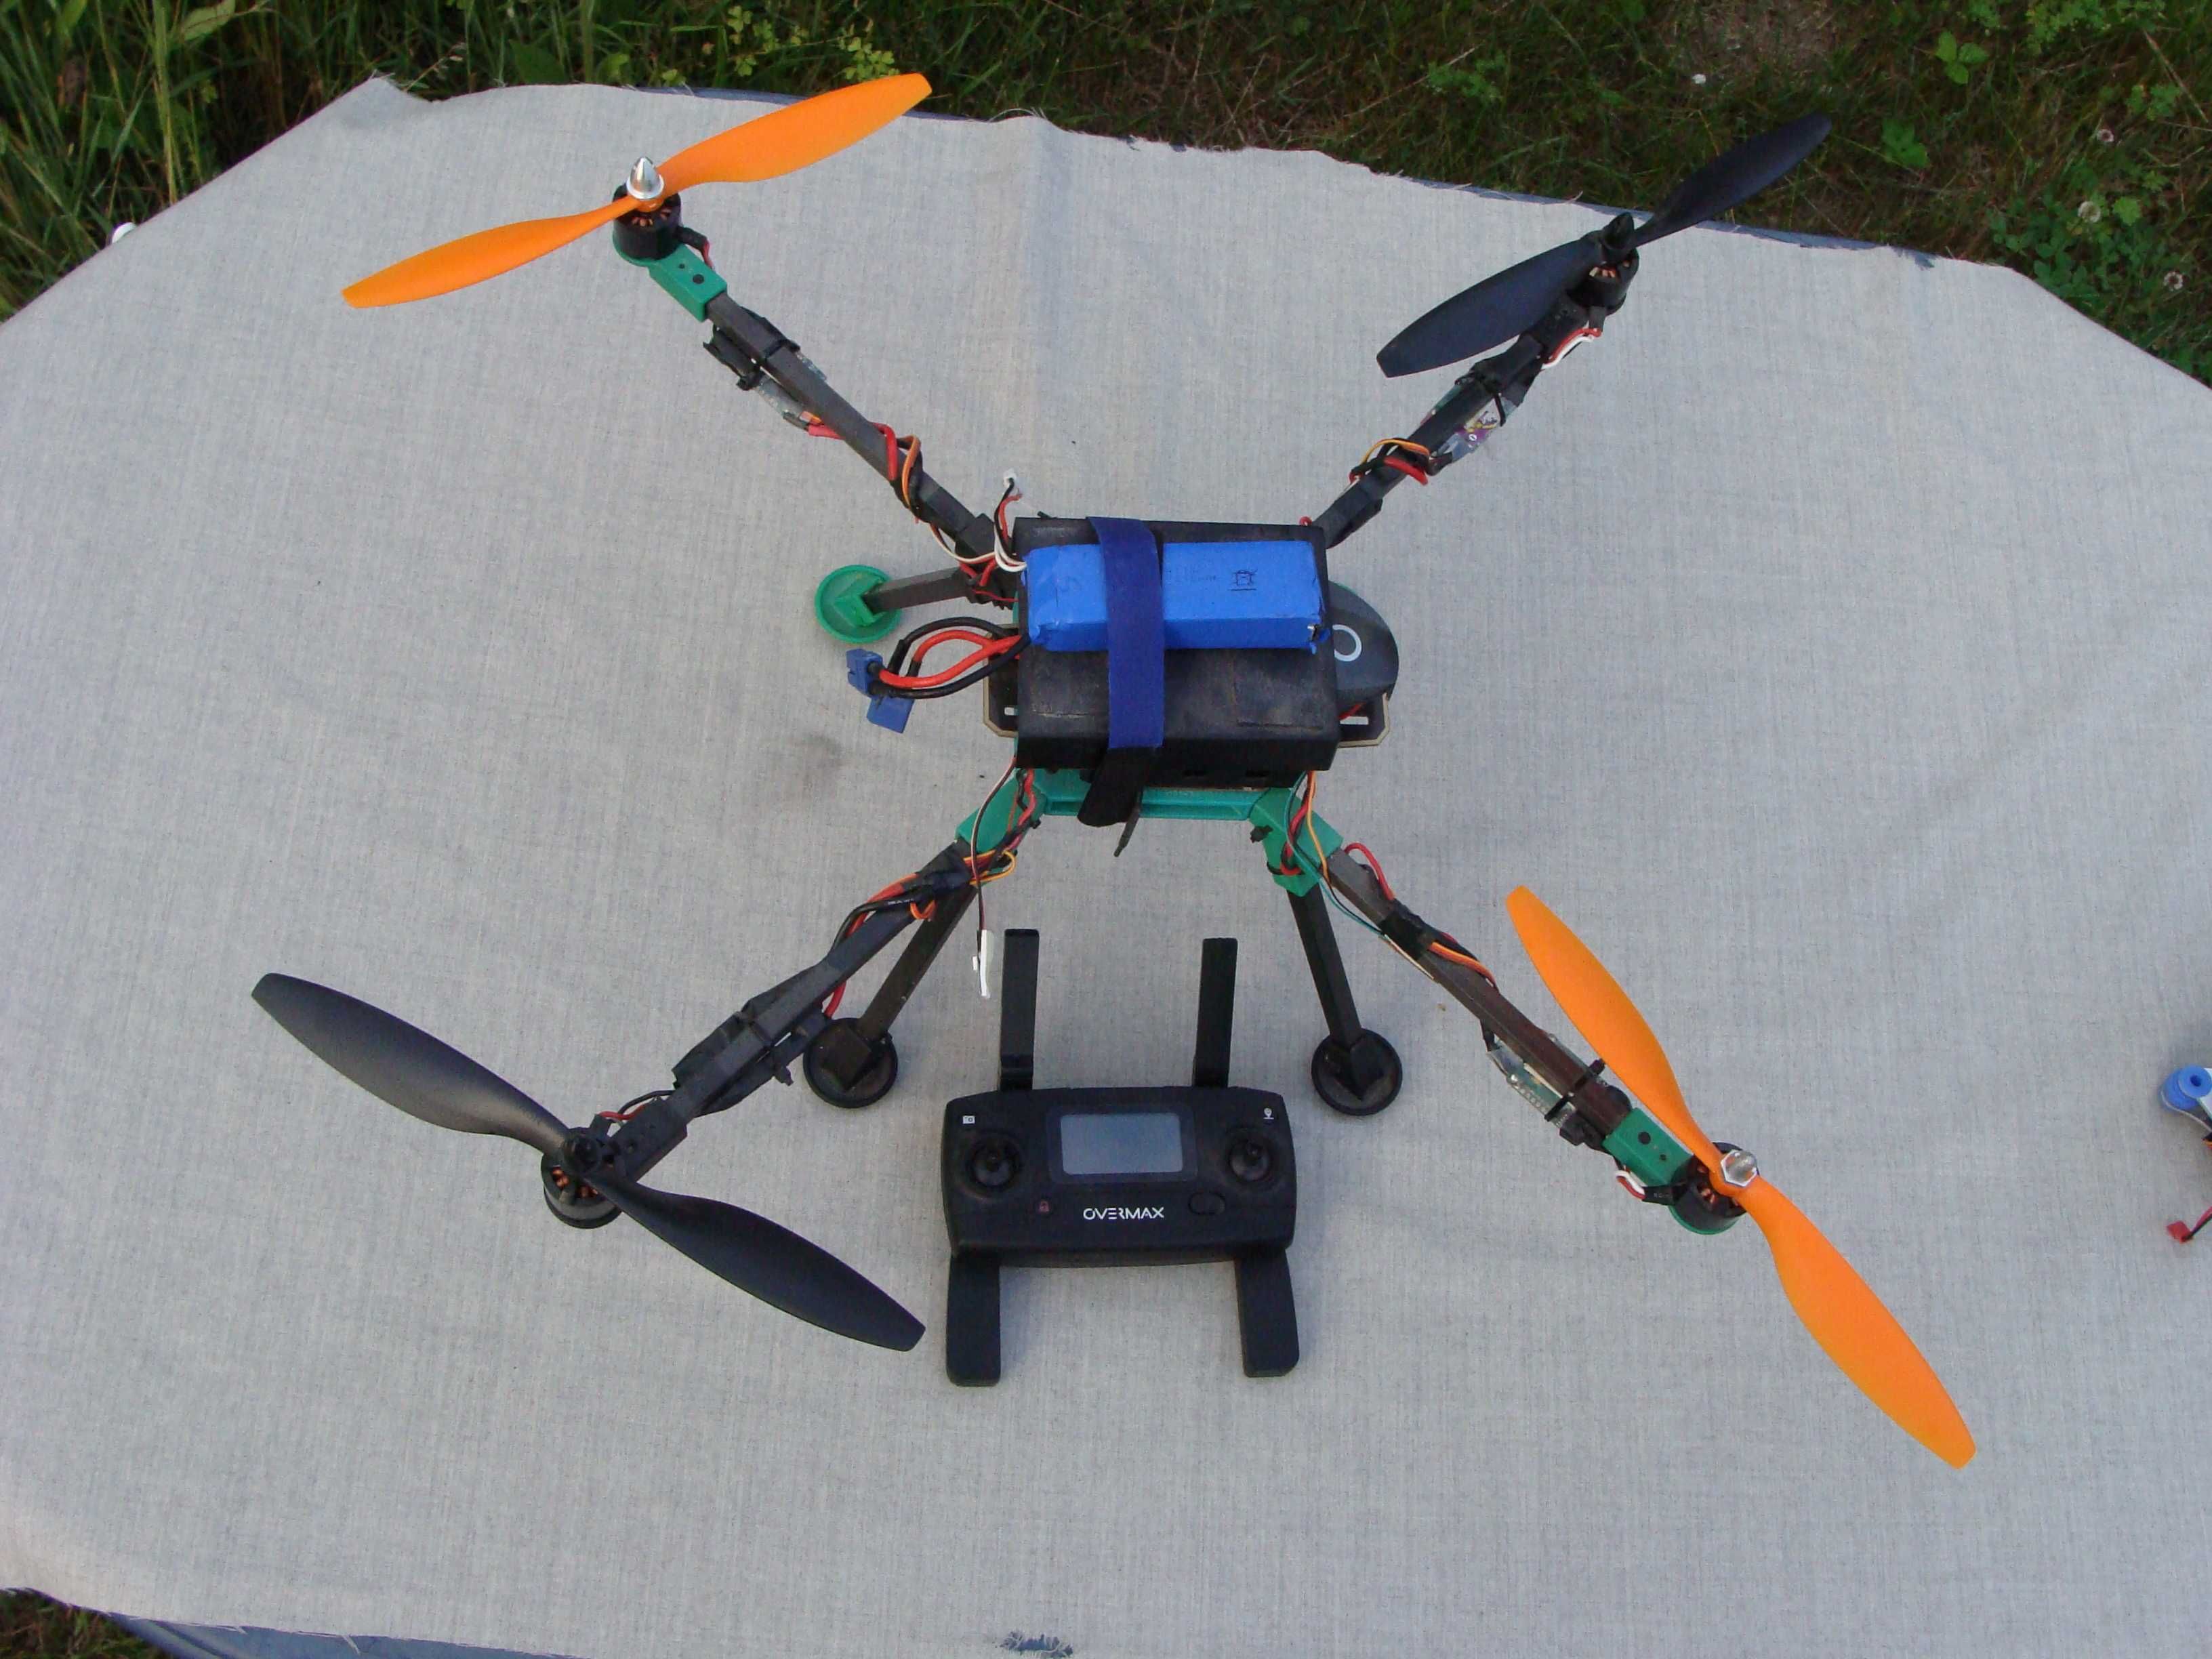 Dron Overmax X-Bee 9.5GPS, rama karbonowa, zasilanie 3S